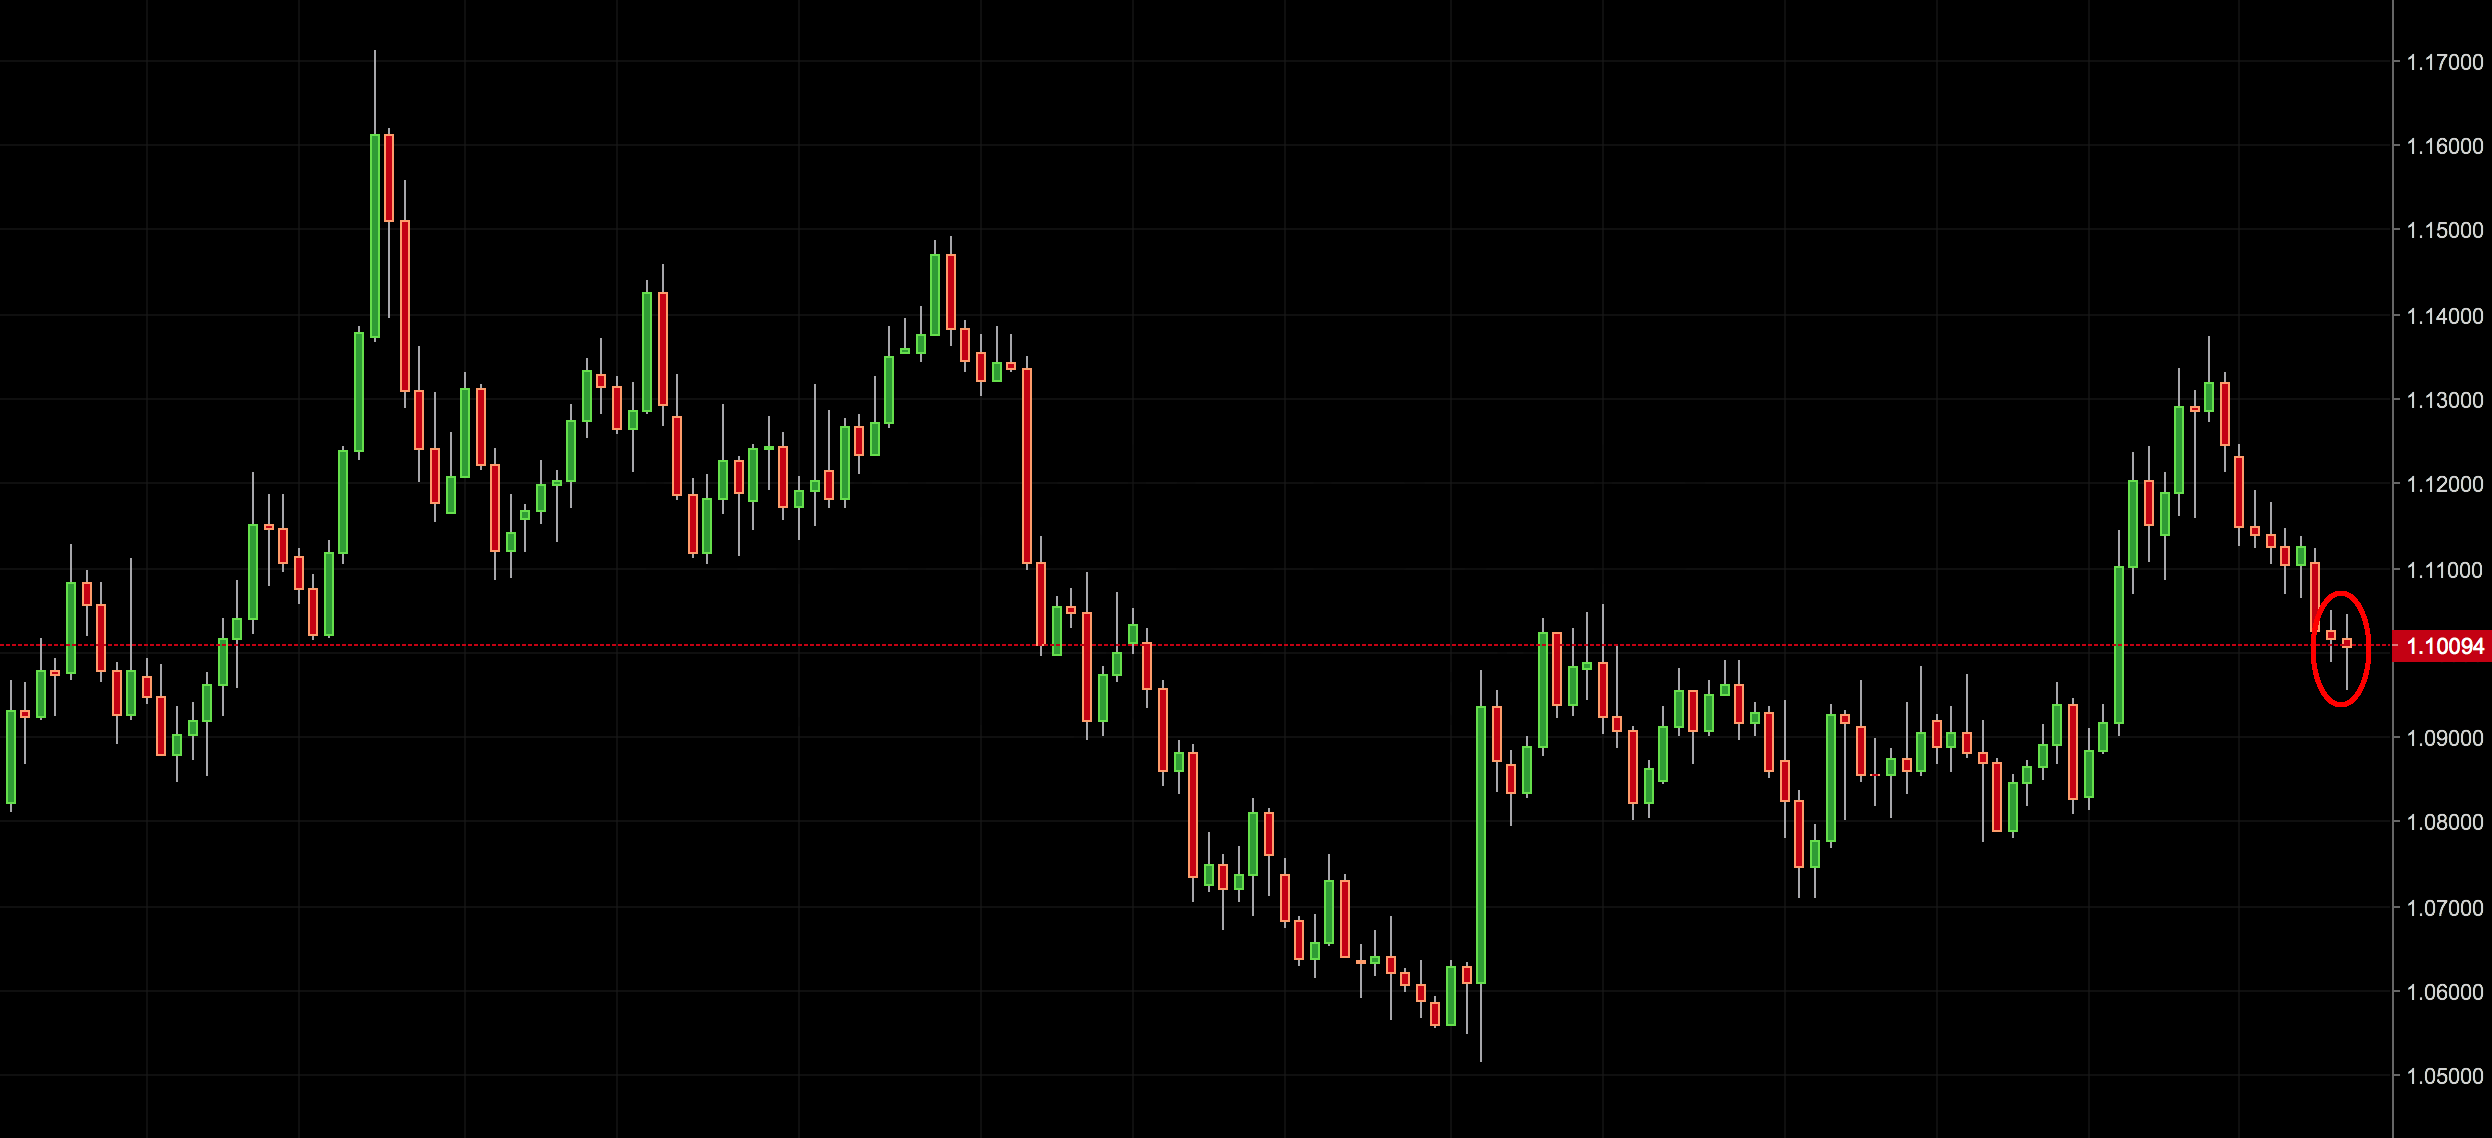 eur/usd trading signal